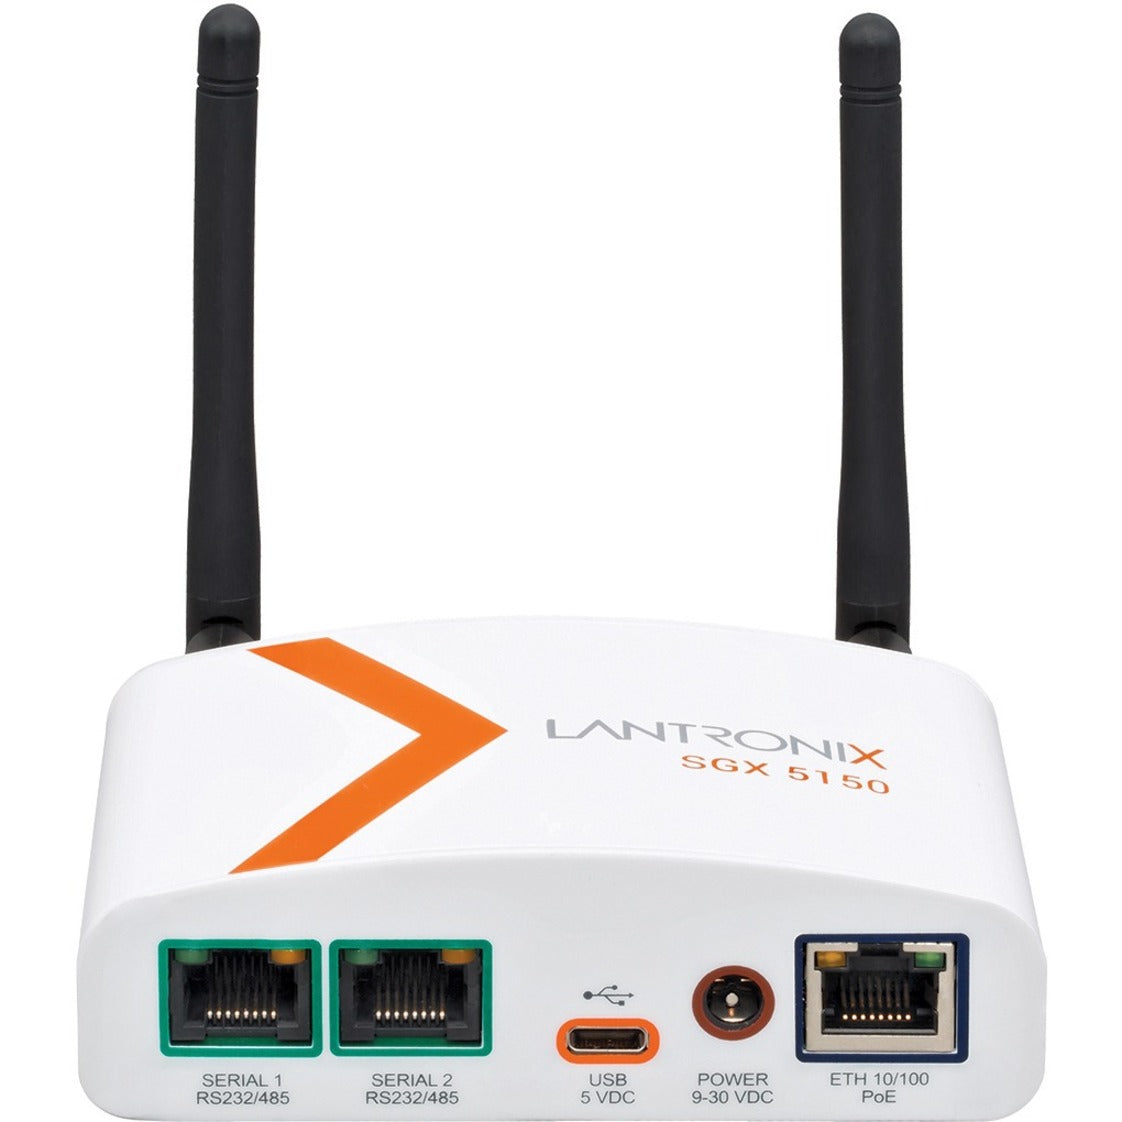 Lantronix SGX5150202US SGX 5150 IoT Device Gateway, 11AC 2XRS485 USB & Ethernet